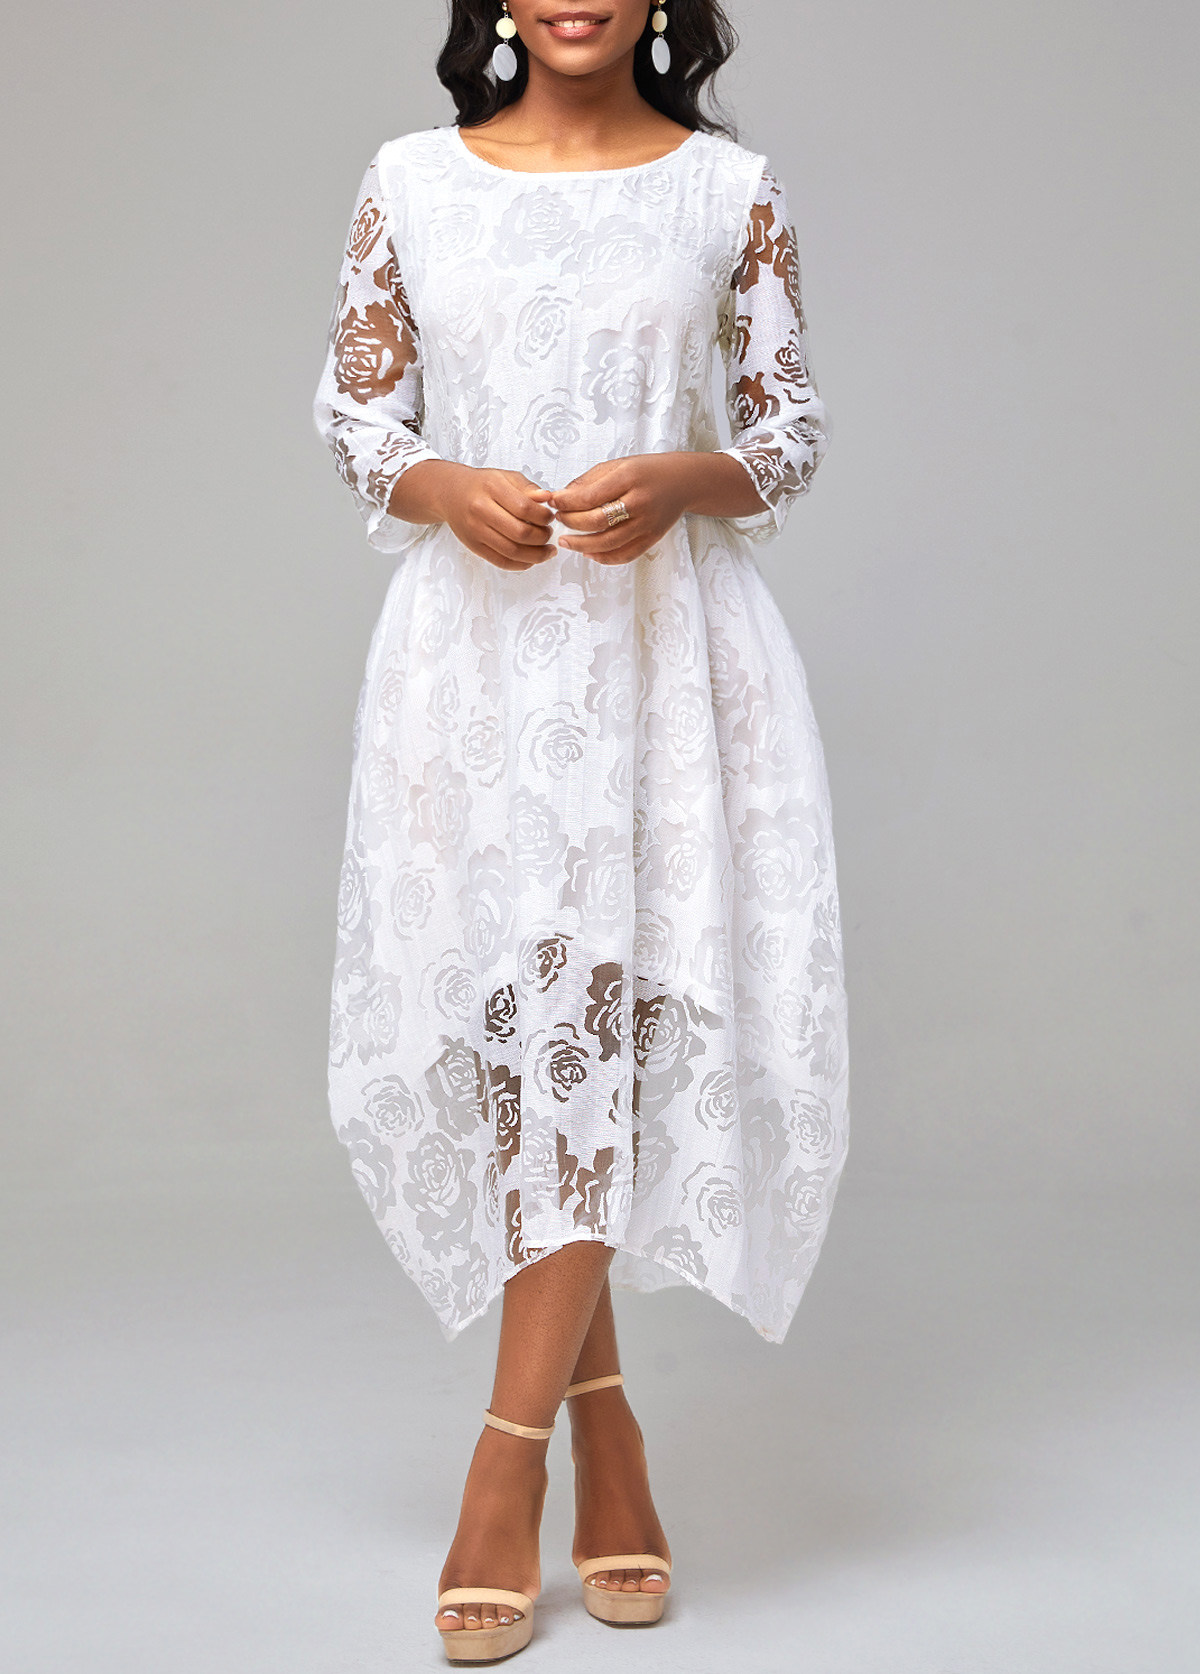 Valentine's Day Floral Print Asymmetry White Dress